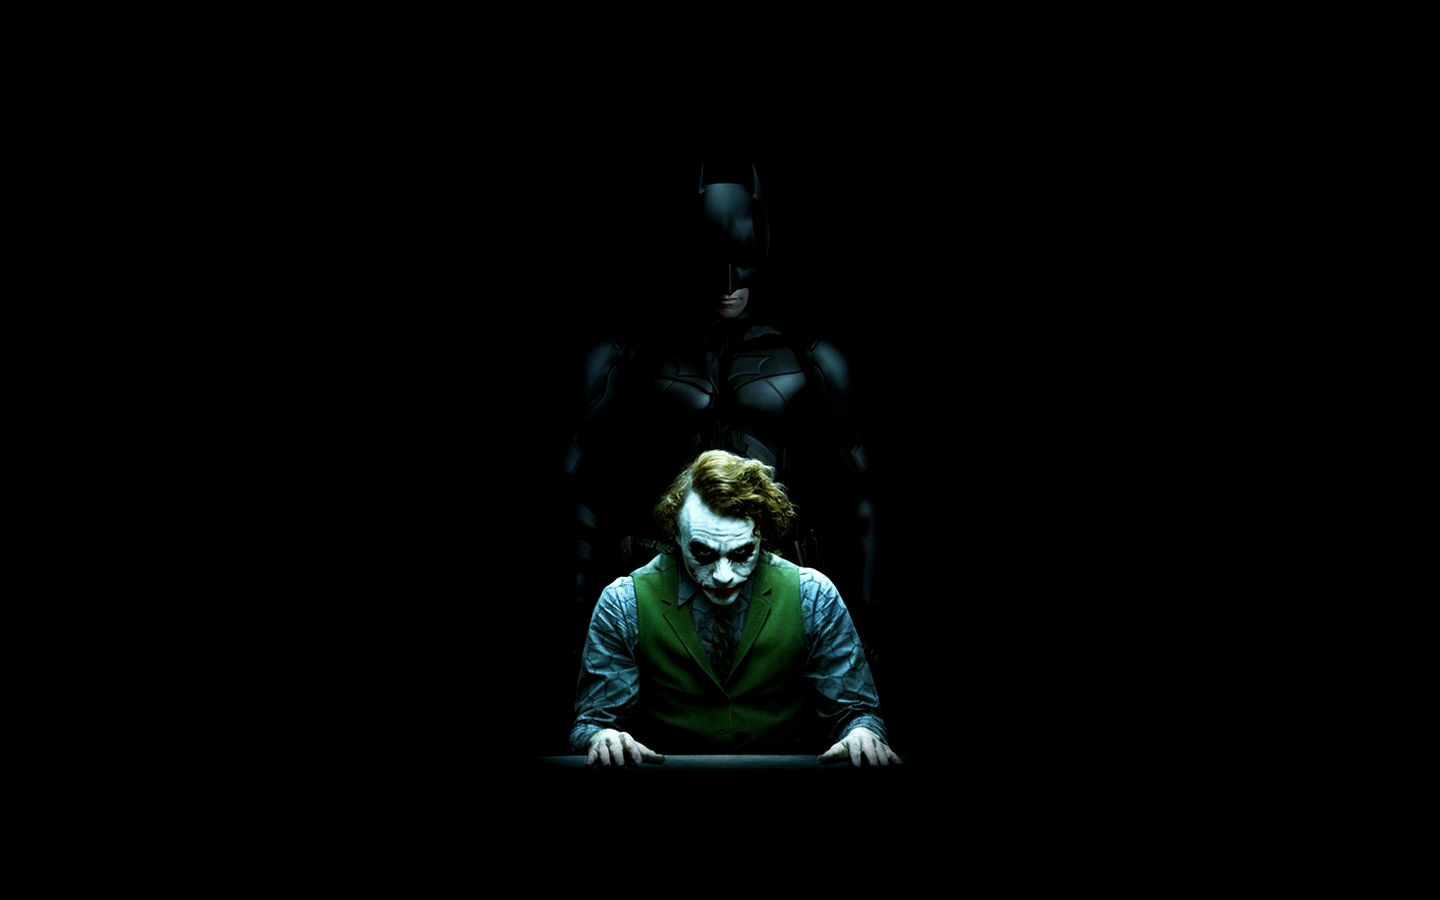 the joker batman dark knight desktop 1440x900 wallpaper 278248jpg 1440x900